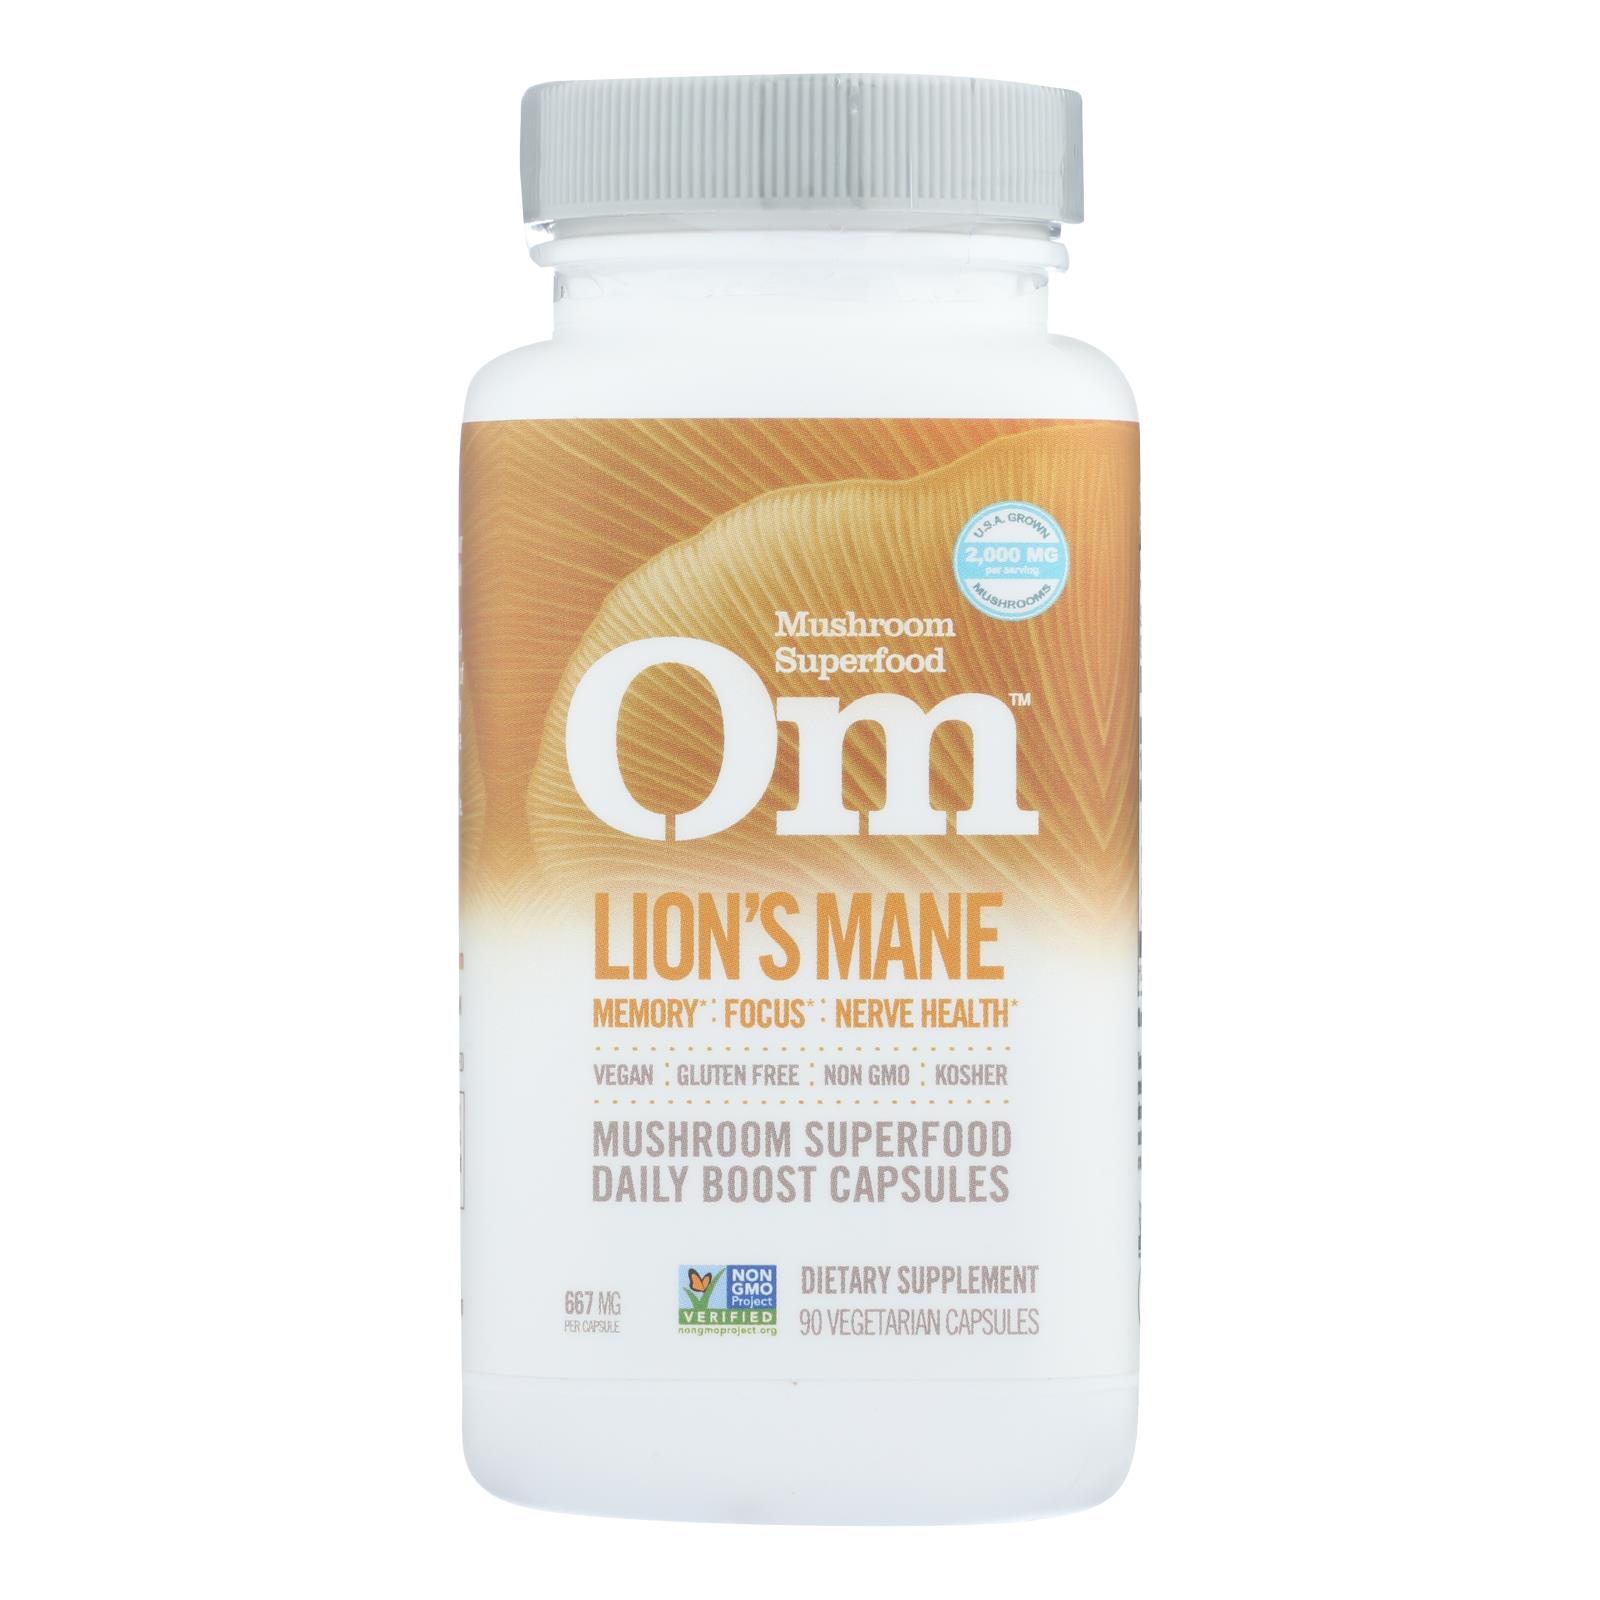 Organic Mushroom Nutrition - Mush Sprfd Lions Mane Cap - 1 Each - 90 CT